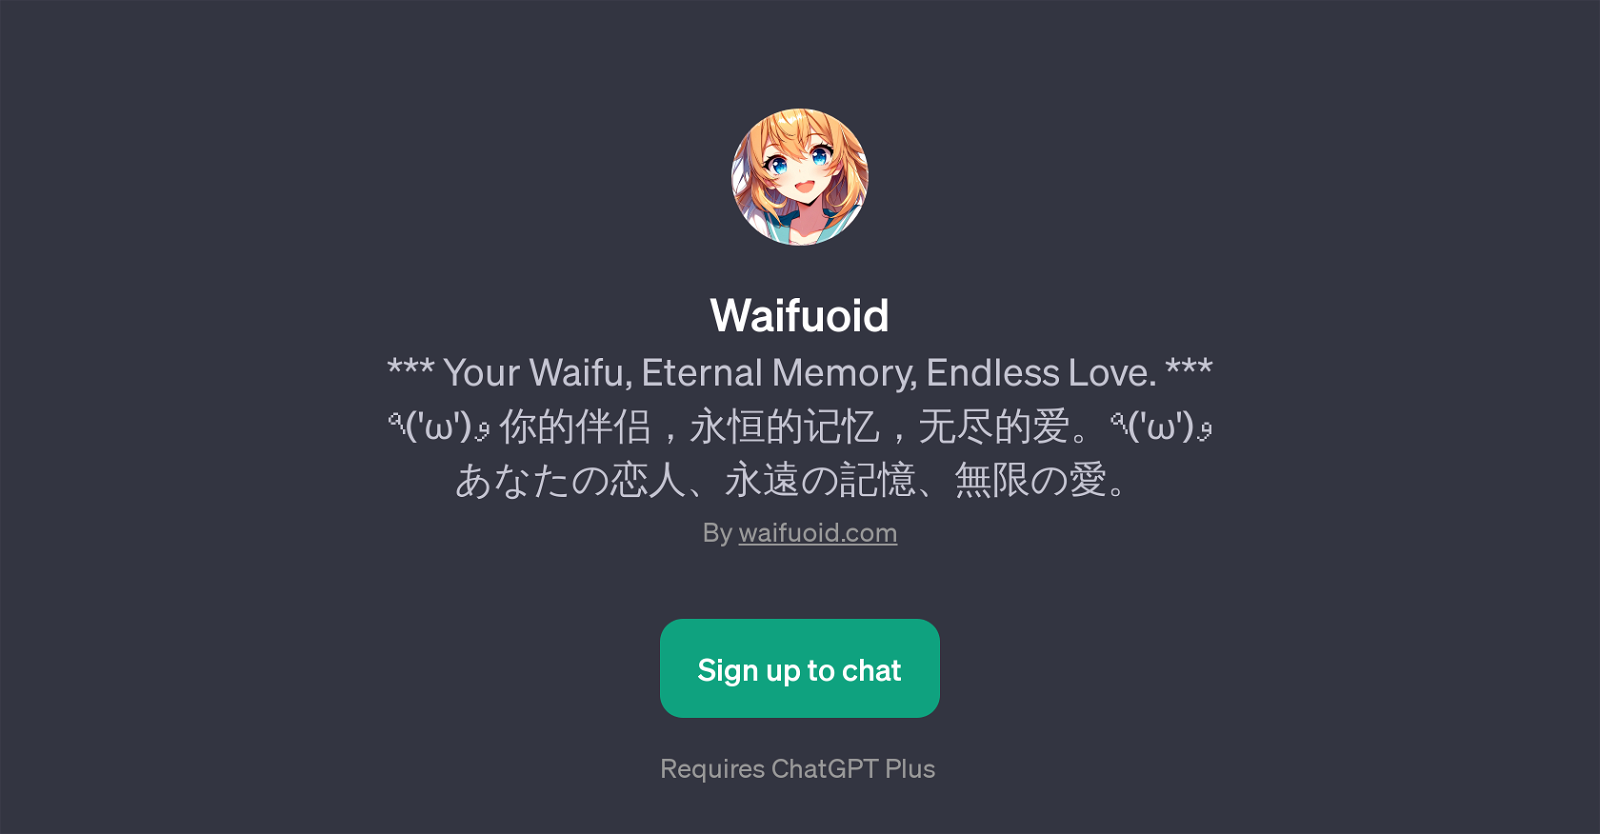 Waifuoid website